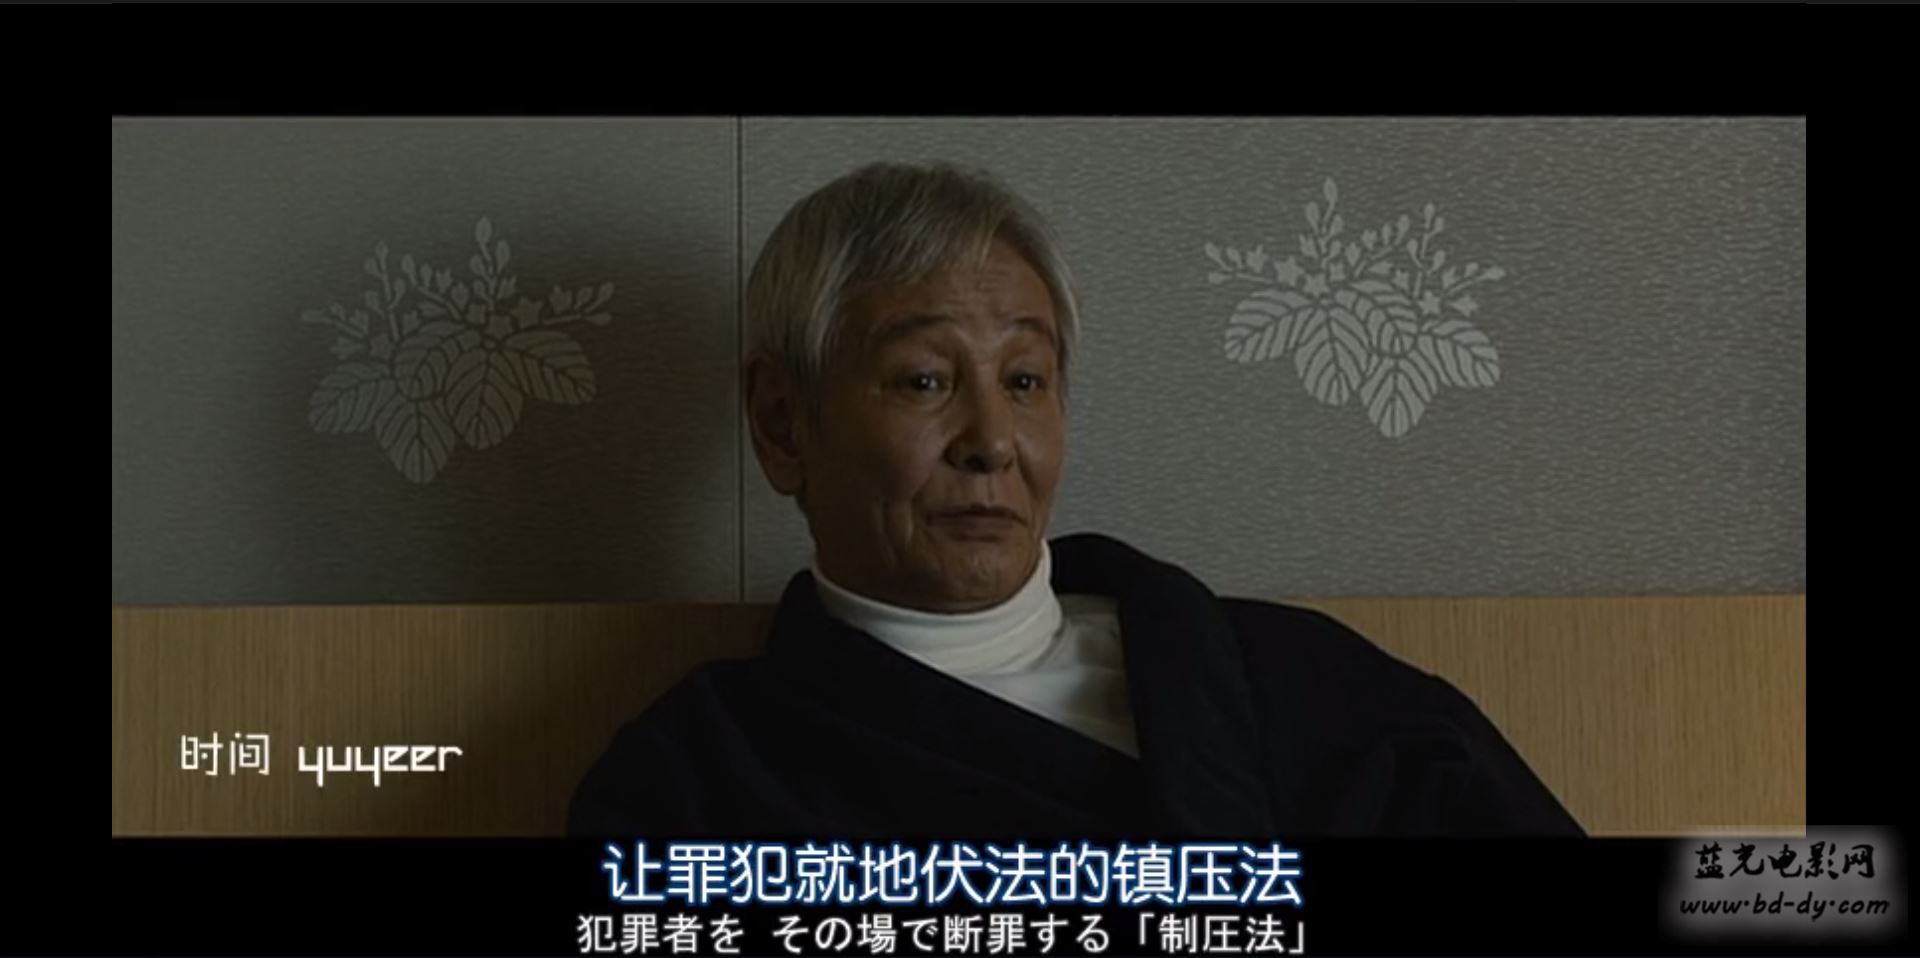 《S-最后的警官 电影版》2015日本动作犯罪.DVD.中日双字截图;jsessionid=3QNeQoviboEkb93mTgSKRnNp_-X0gMOBZfQyFKR0